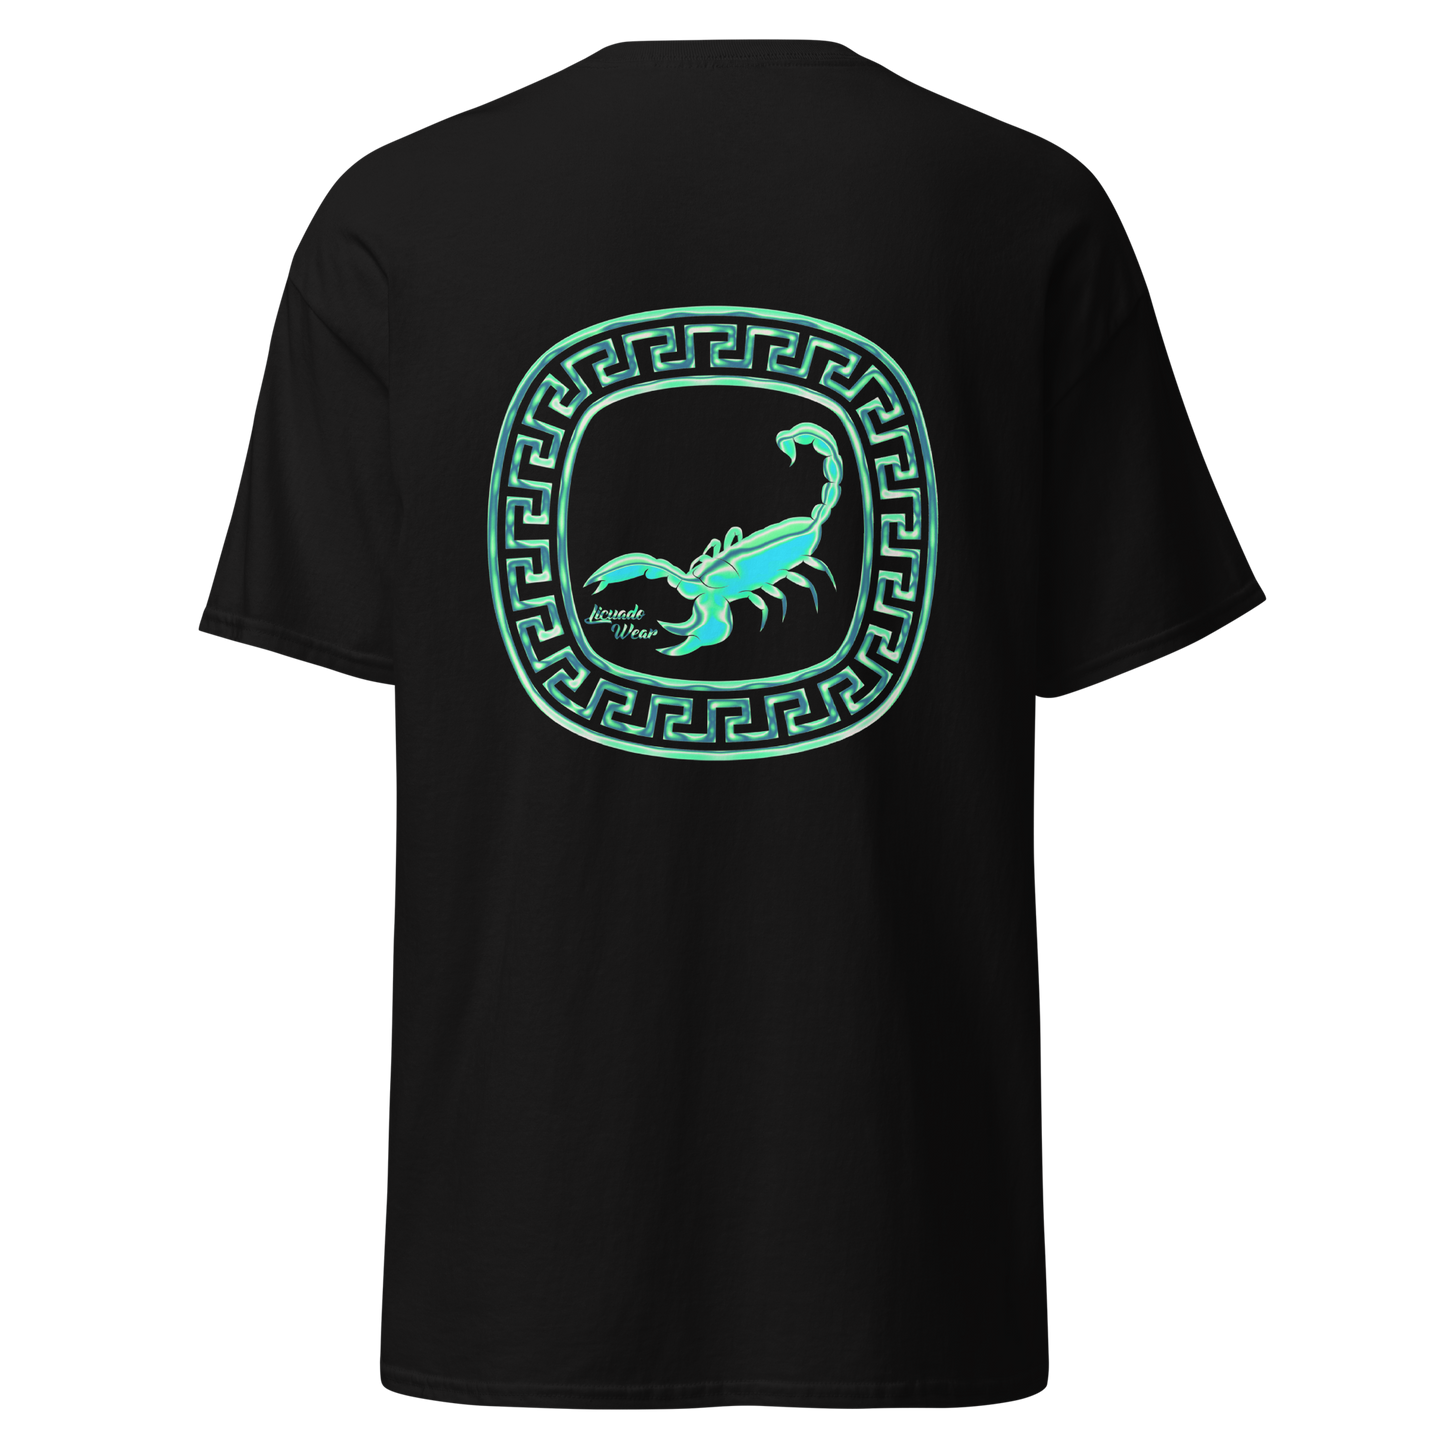 Poison (Green Chrome Escorpión/Scorpion)) - Unisex T-shirt